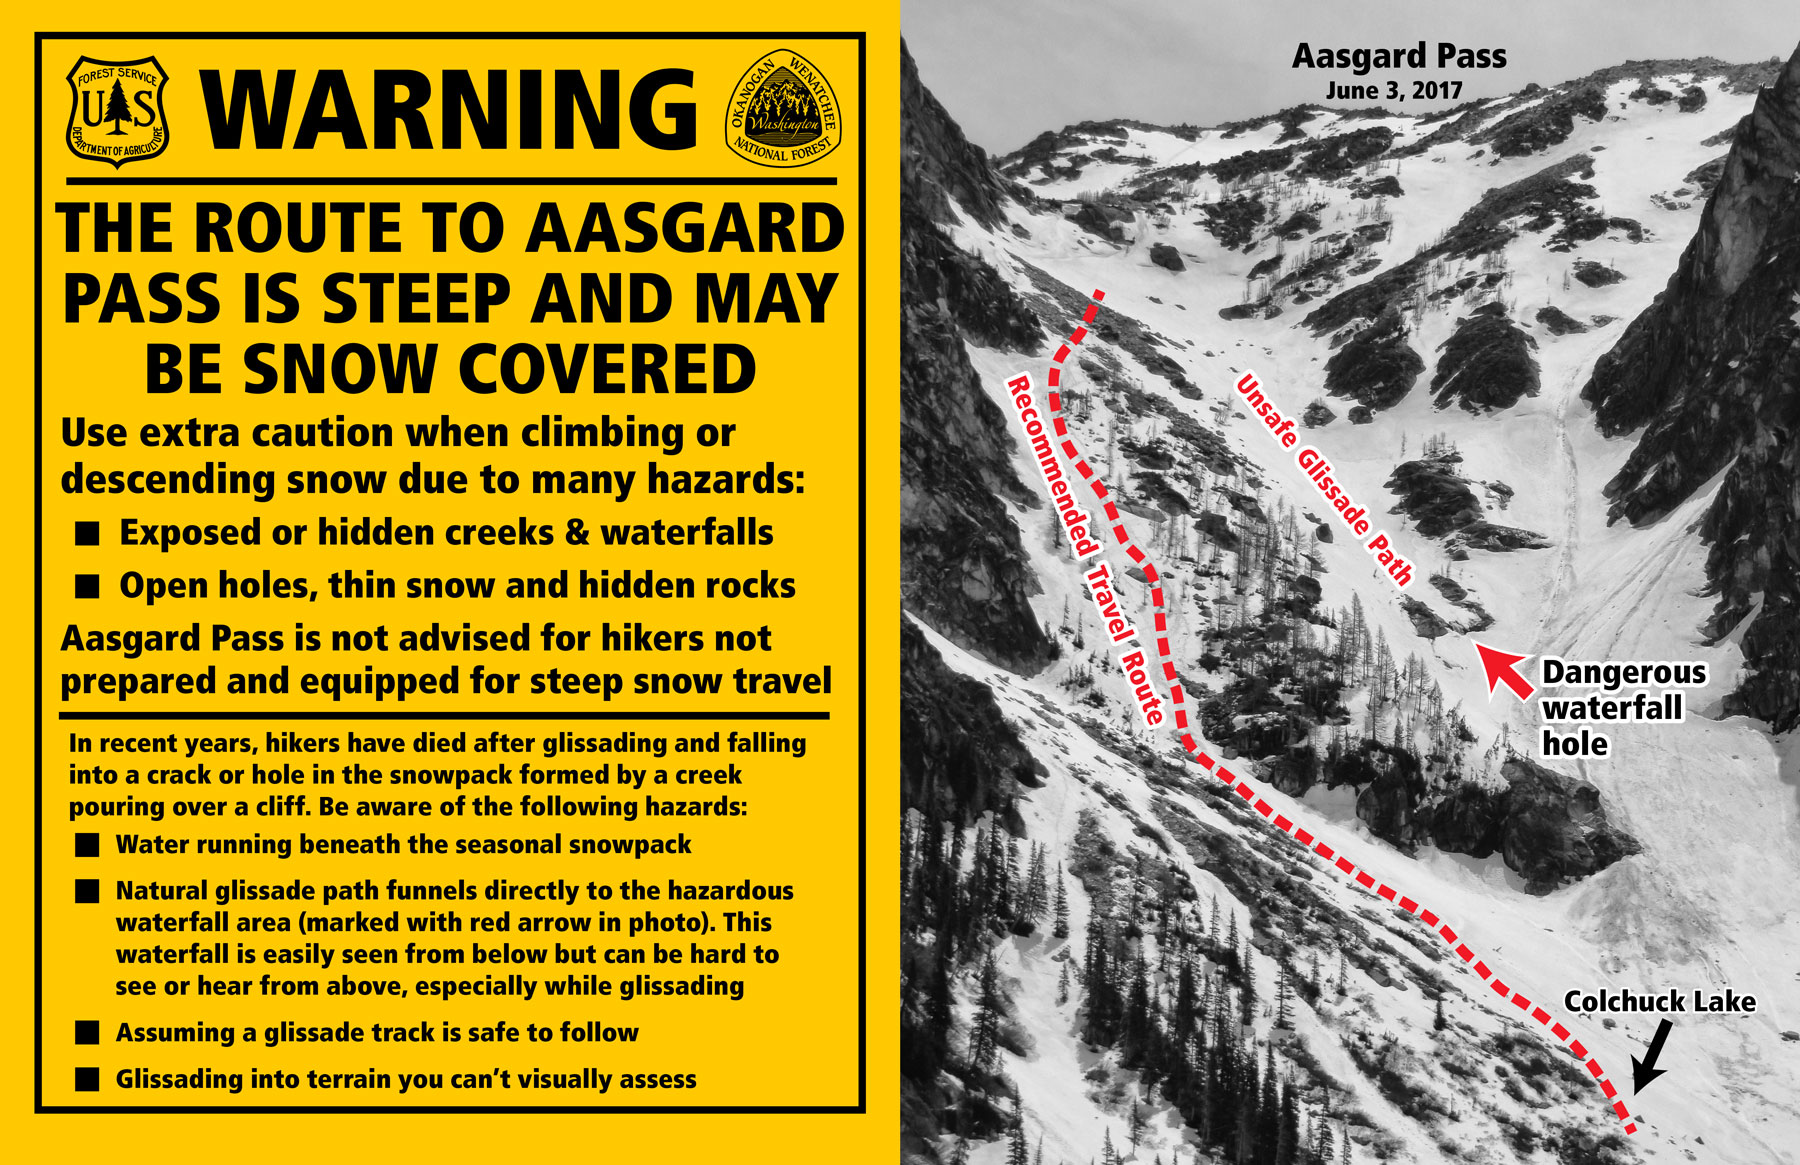 Warning sign for Aasgard Pass